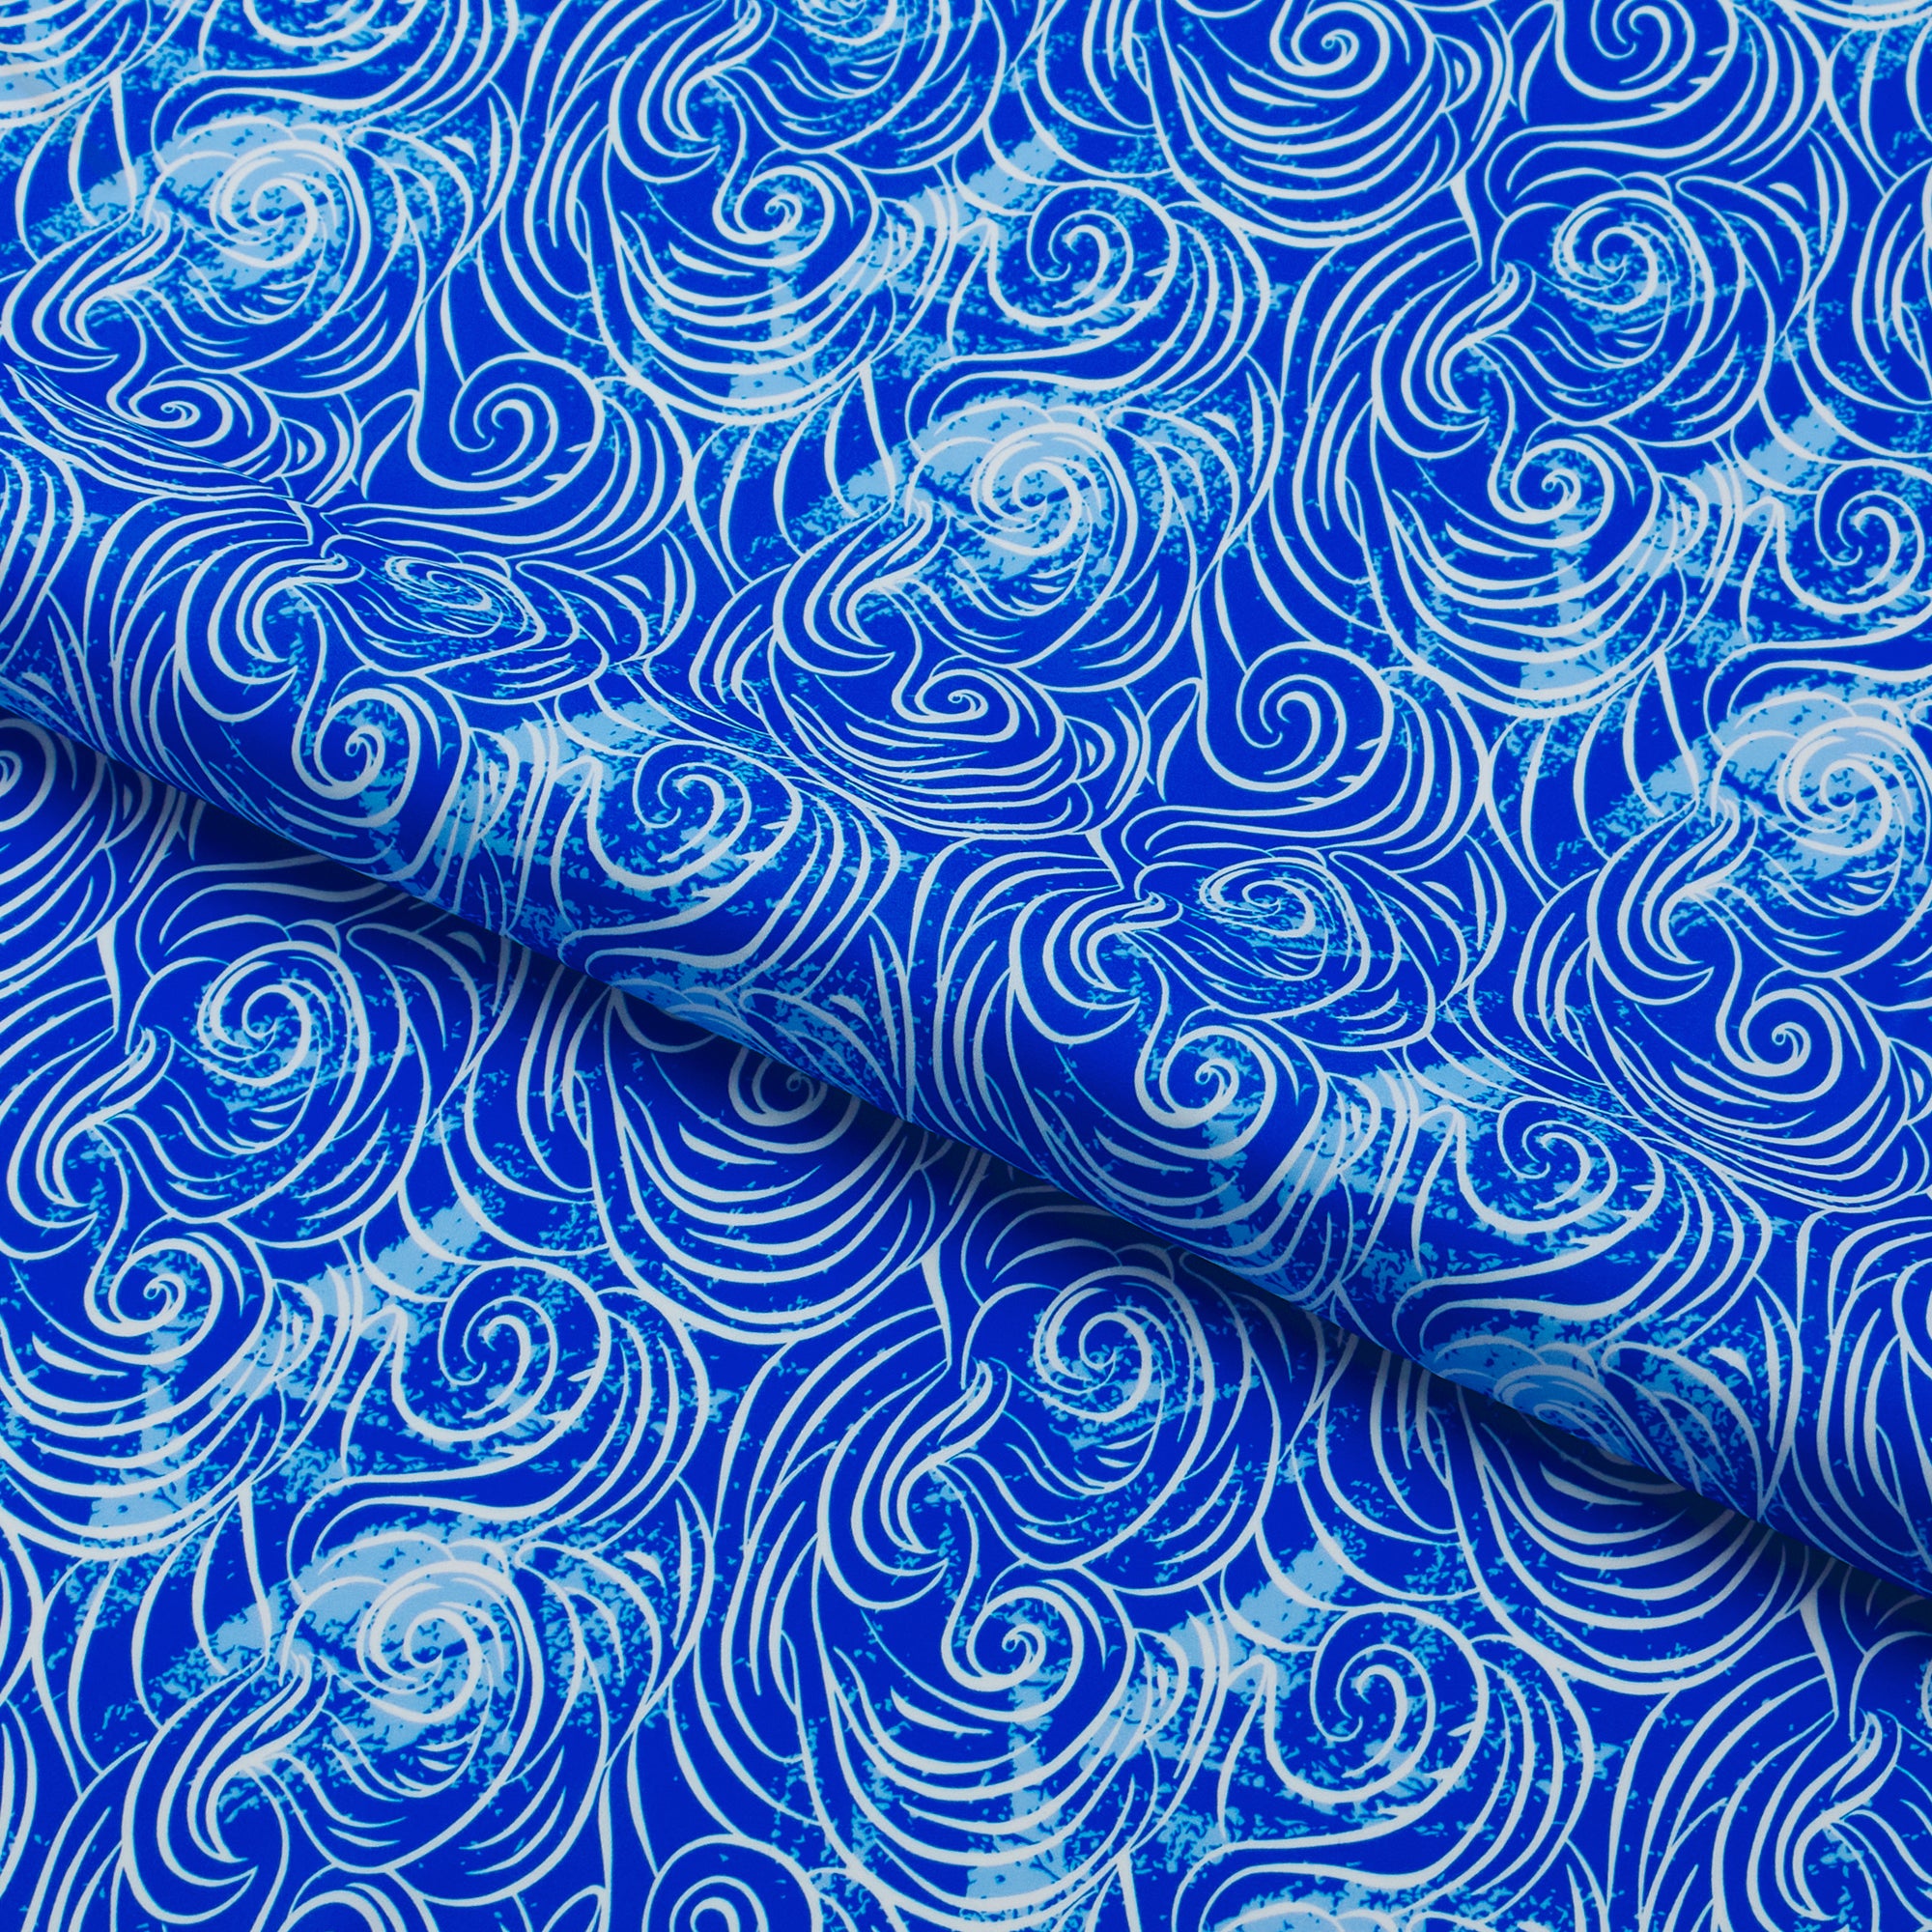 Buy Blue Tornado Print Swimwear Spandex Stretch Fabric, Nylon